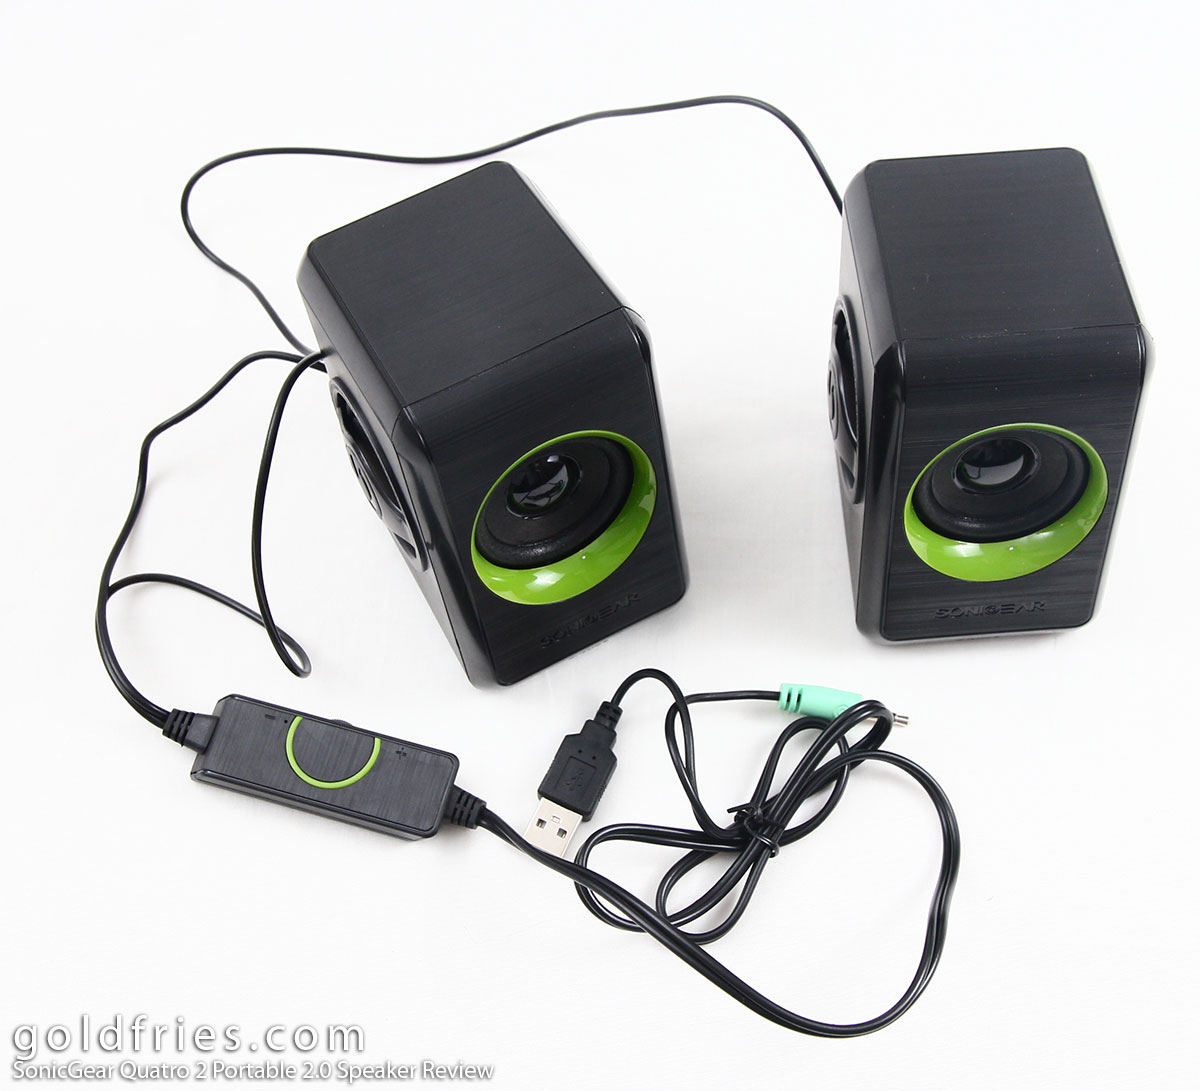 SonicGear Quatro 2 Portable 2.0 Speaker Review